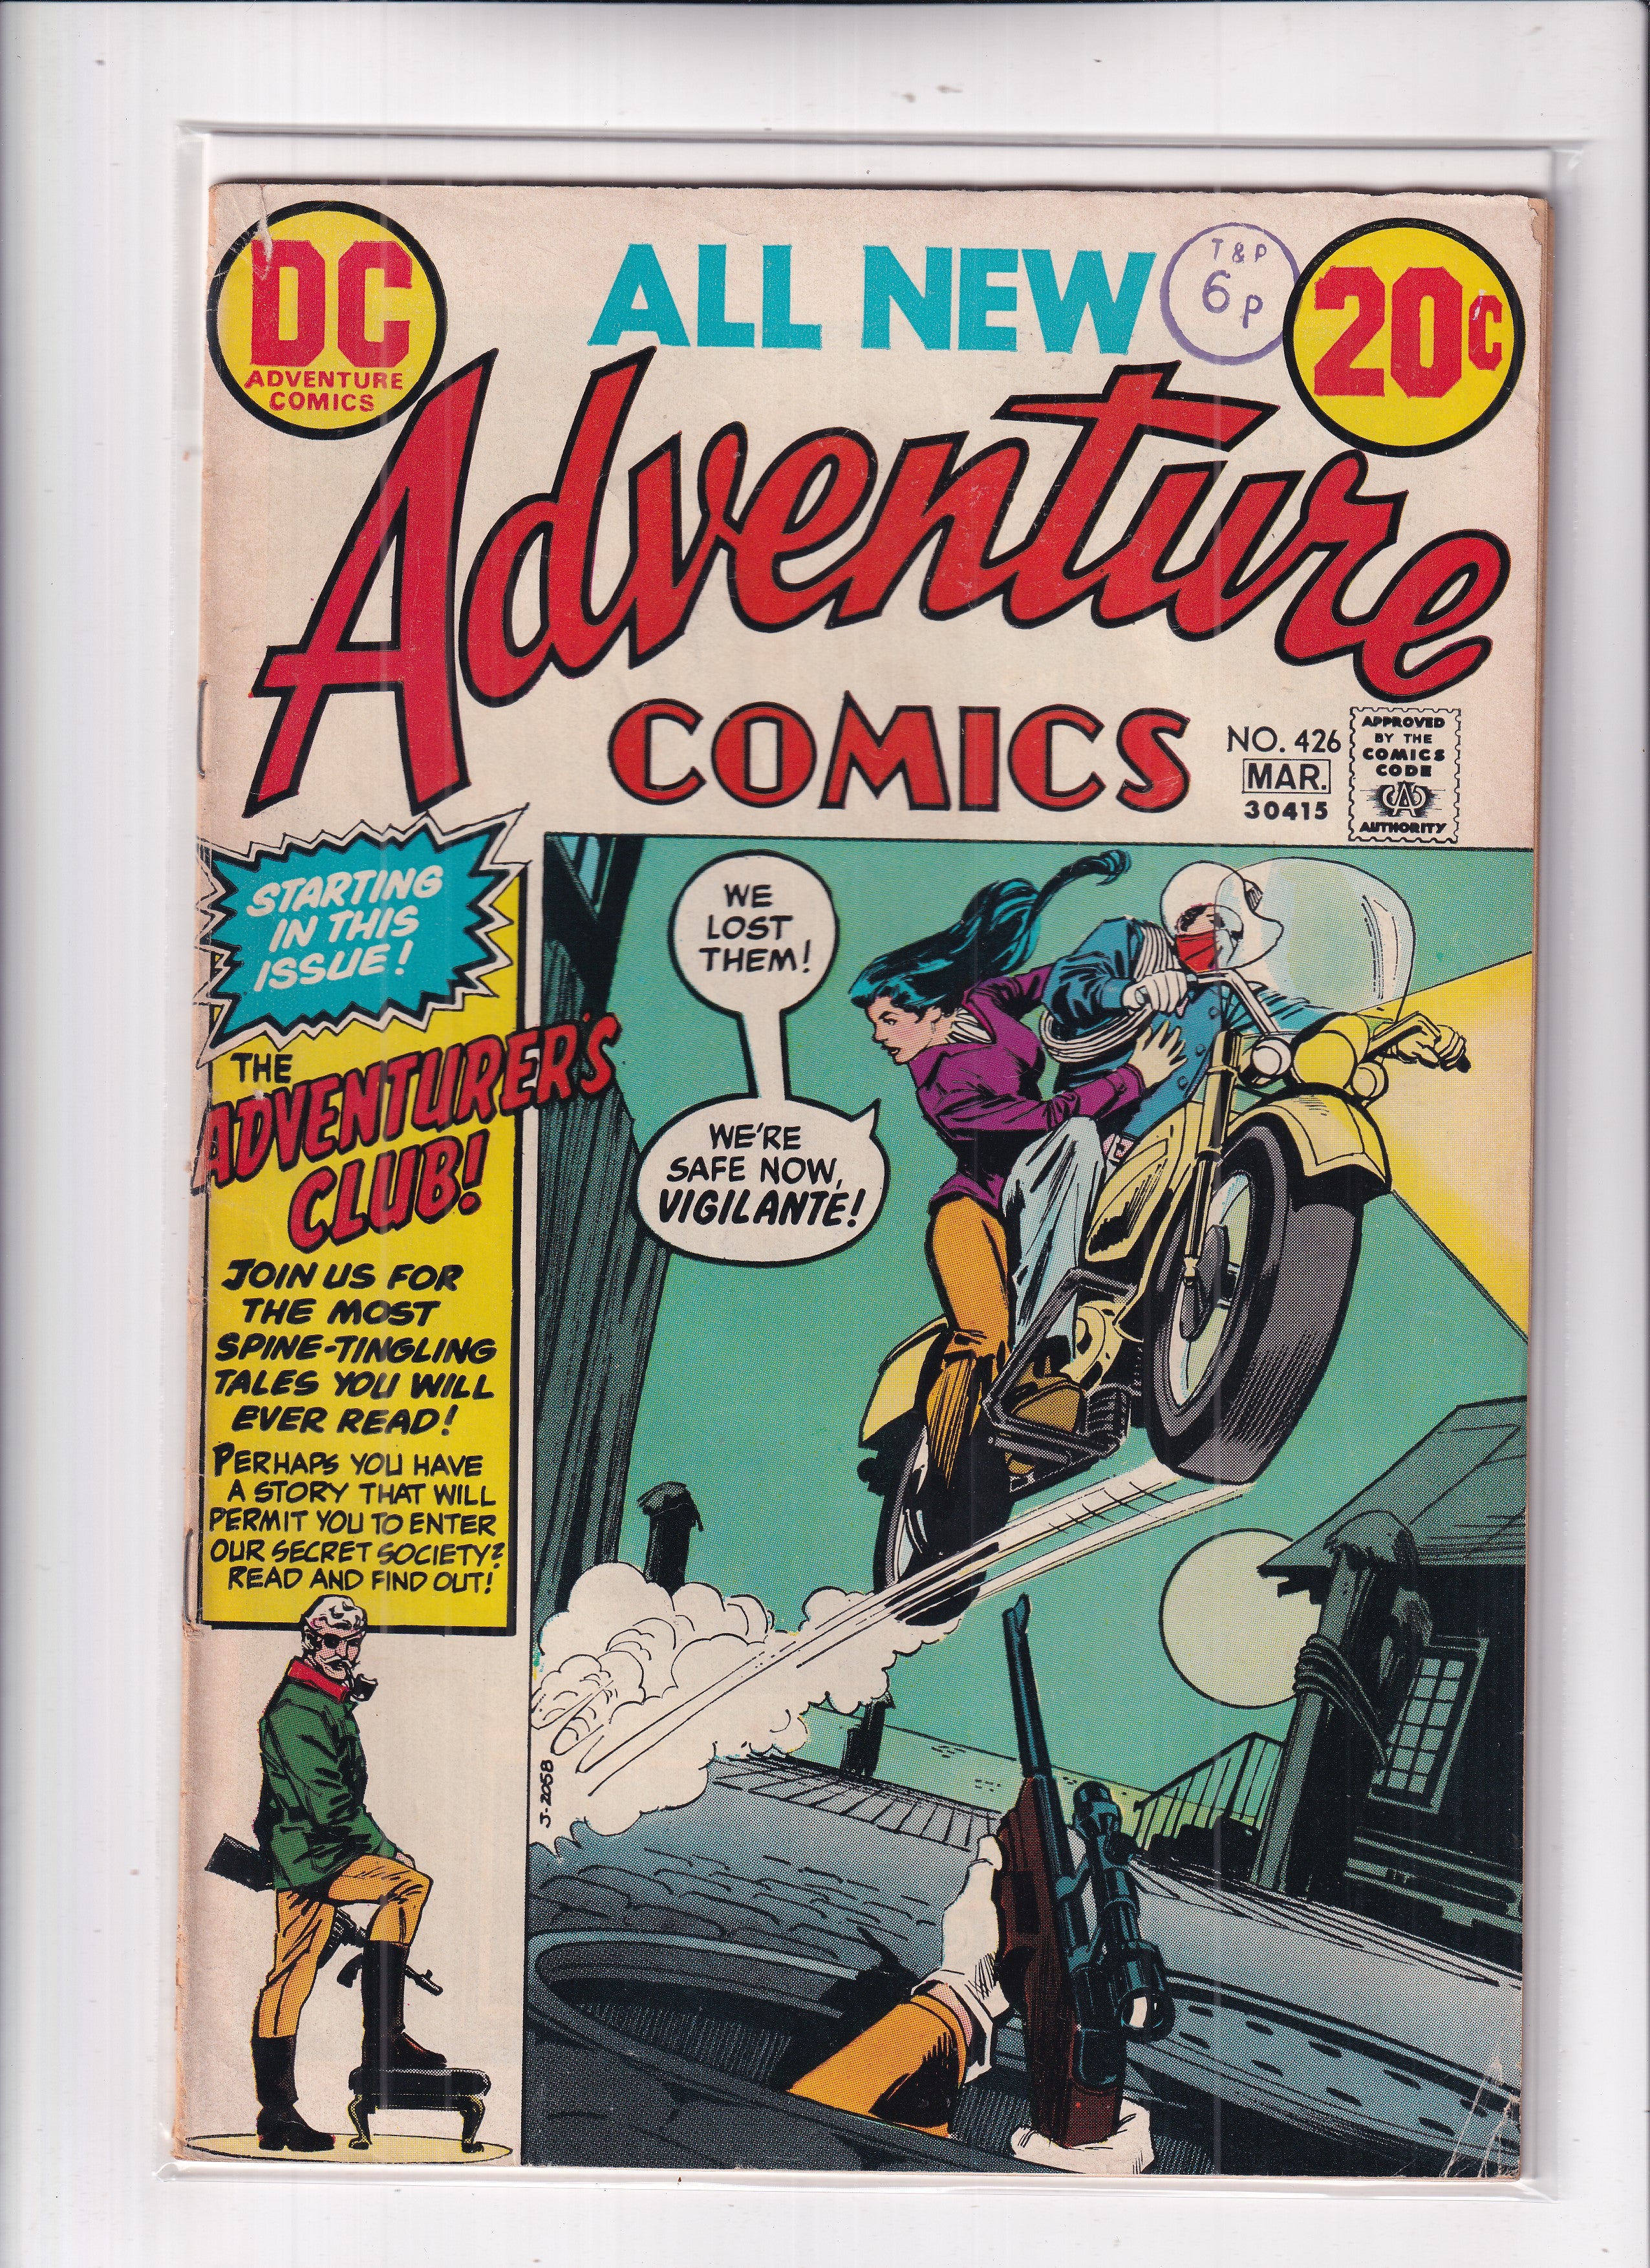 Adventure Comics #426